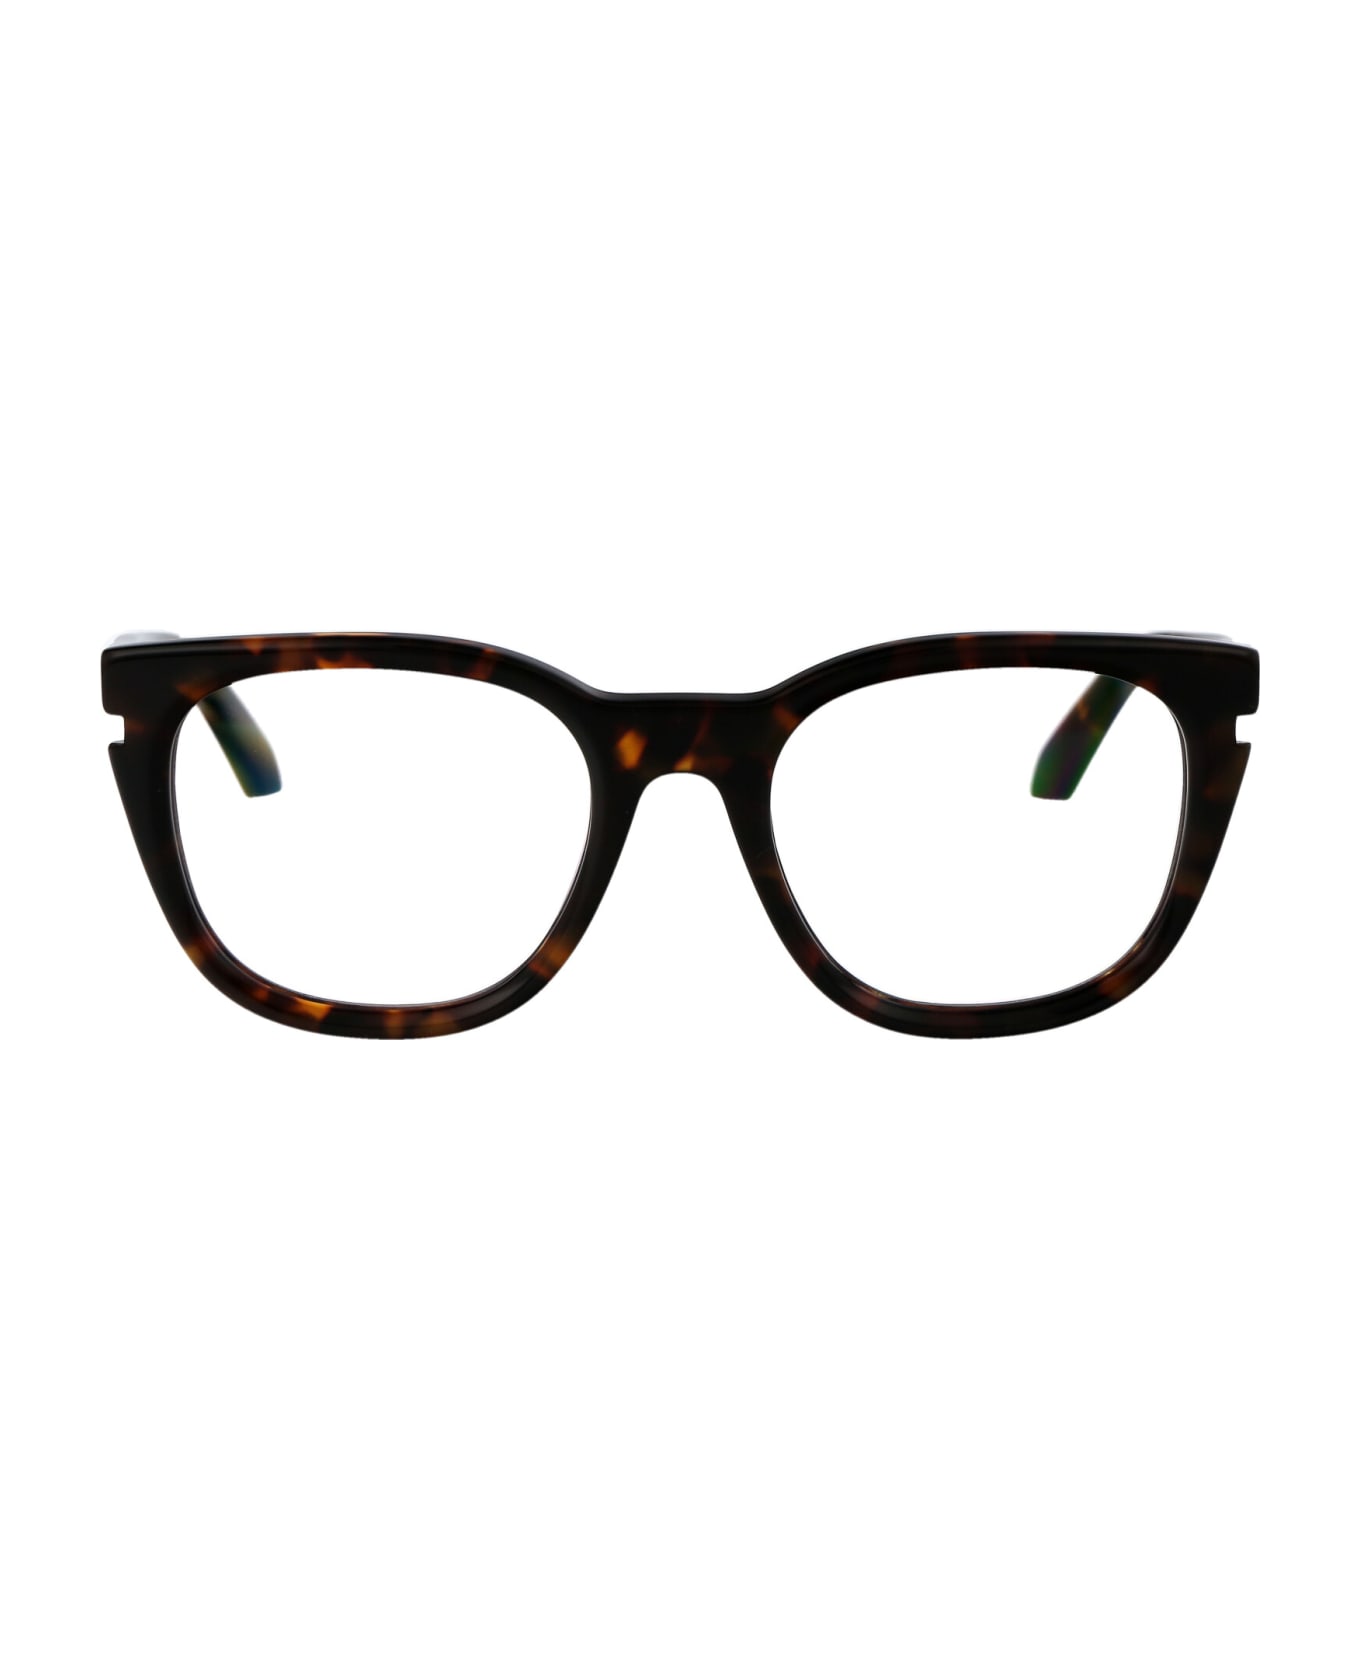 Off-White Optical Style 51 Glasses - 6000 HAVANA